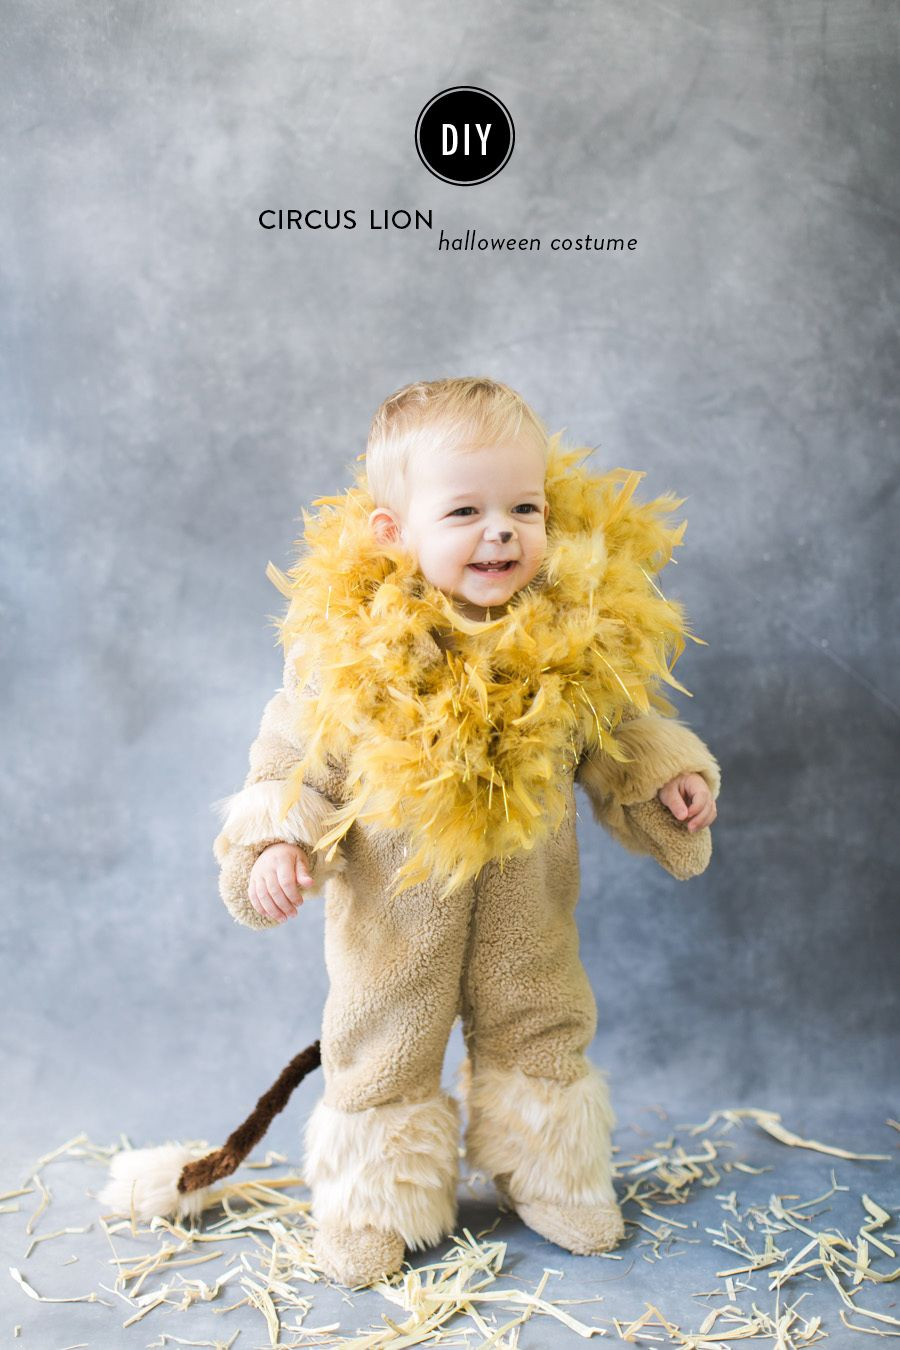 DIY Lion Costume For Toddler
 DIY Halloween Costume Circus Lion